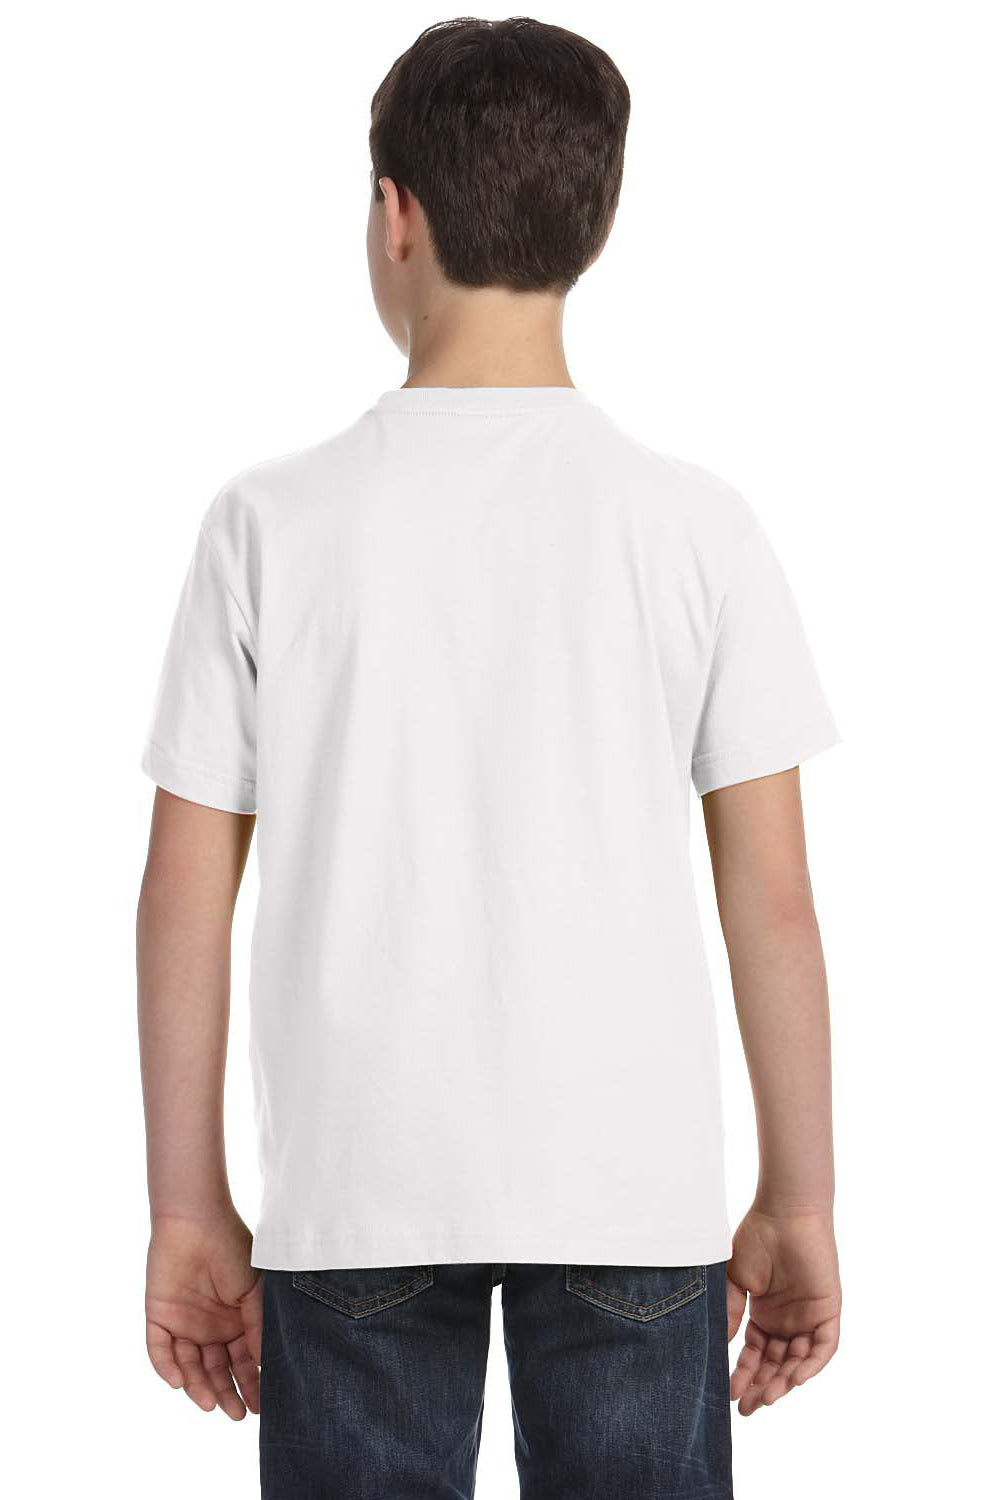 LAT 6101 Youth Fine Jersey Short Sleeve Crewneck T-Shirt White Back